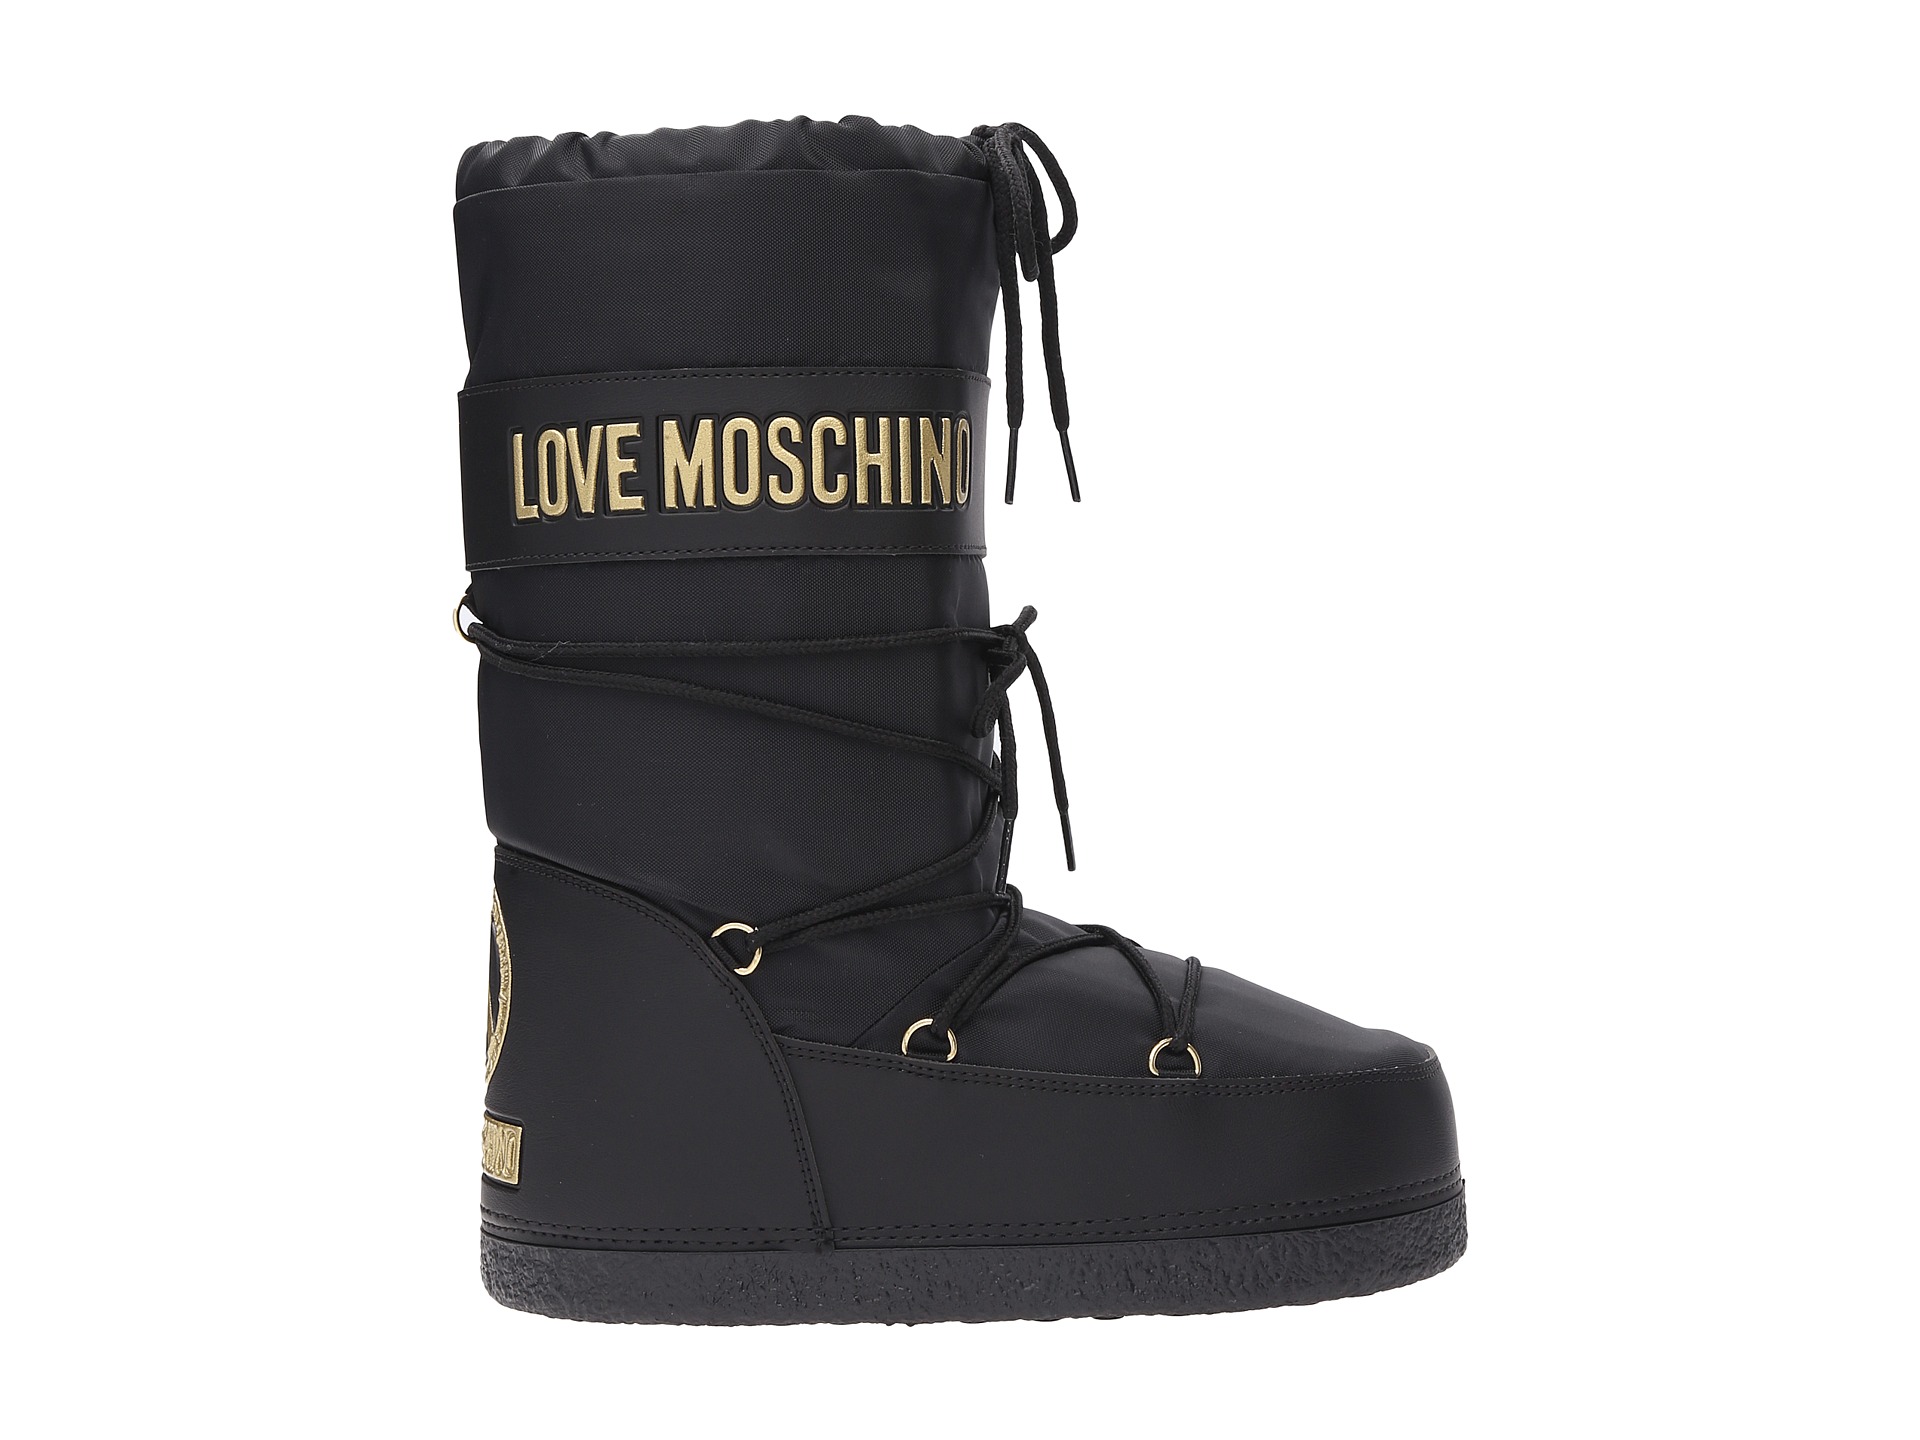 LOVE Moschino Logo Moon Boot Black - 0 Free Shipping BOTH Ways